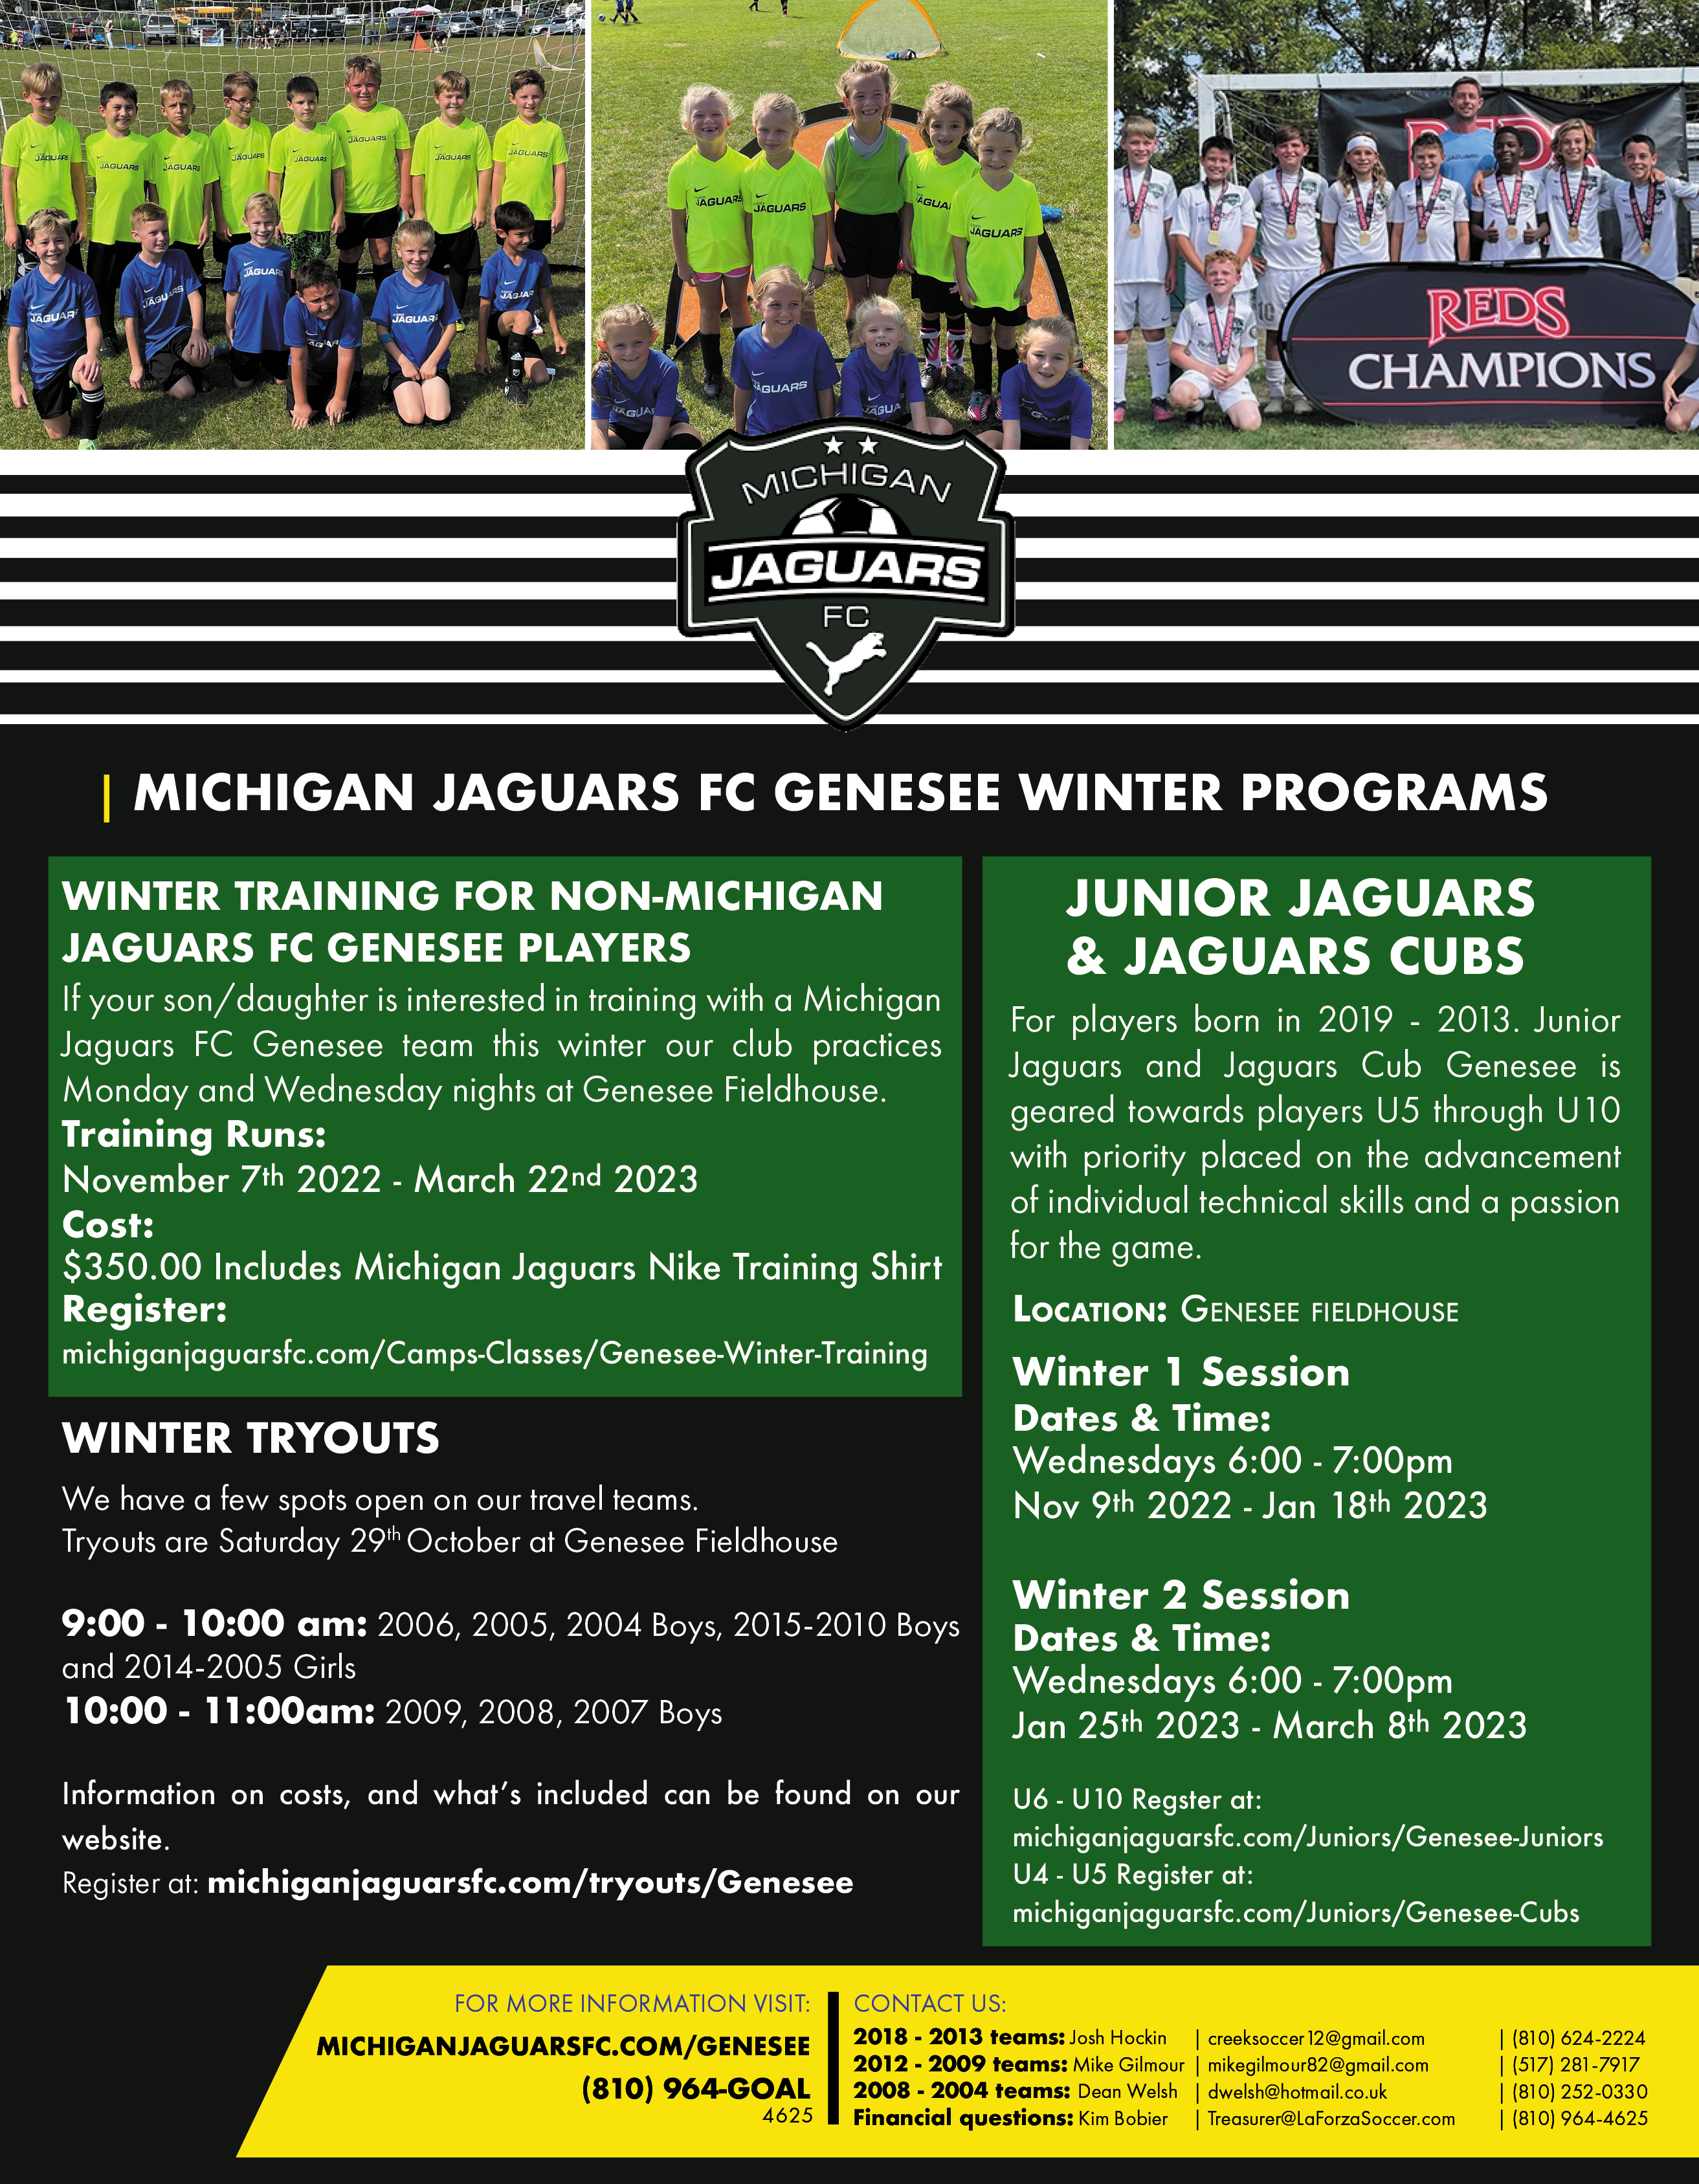 MI Jaguars FC Genesee call 810-964-4625 for information